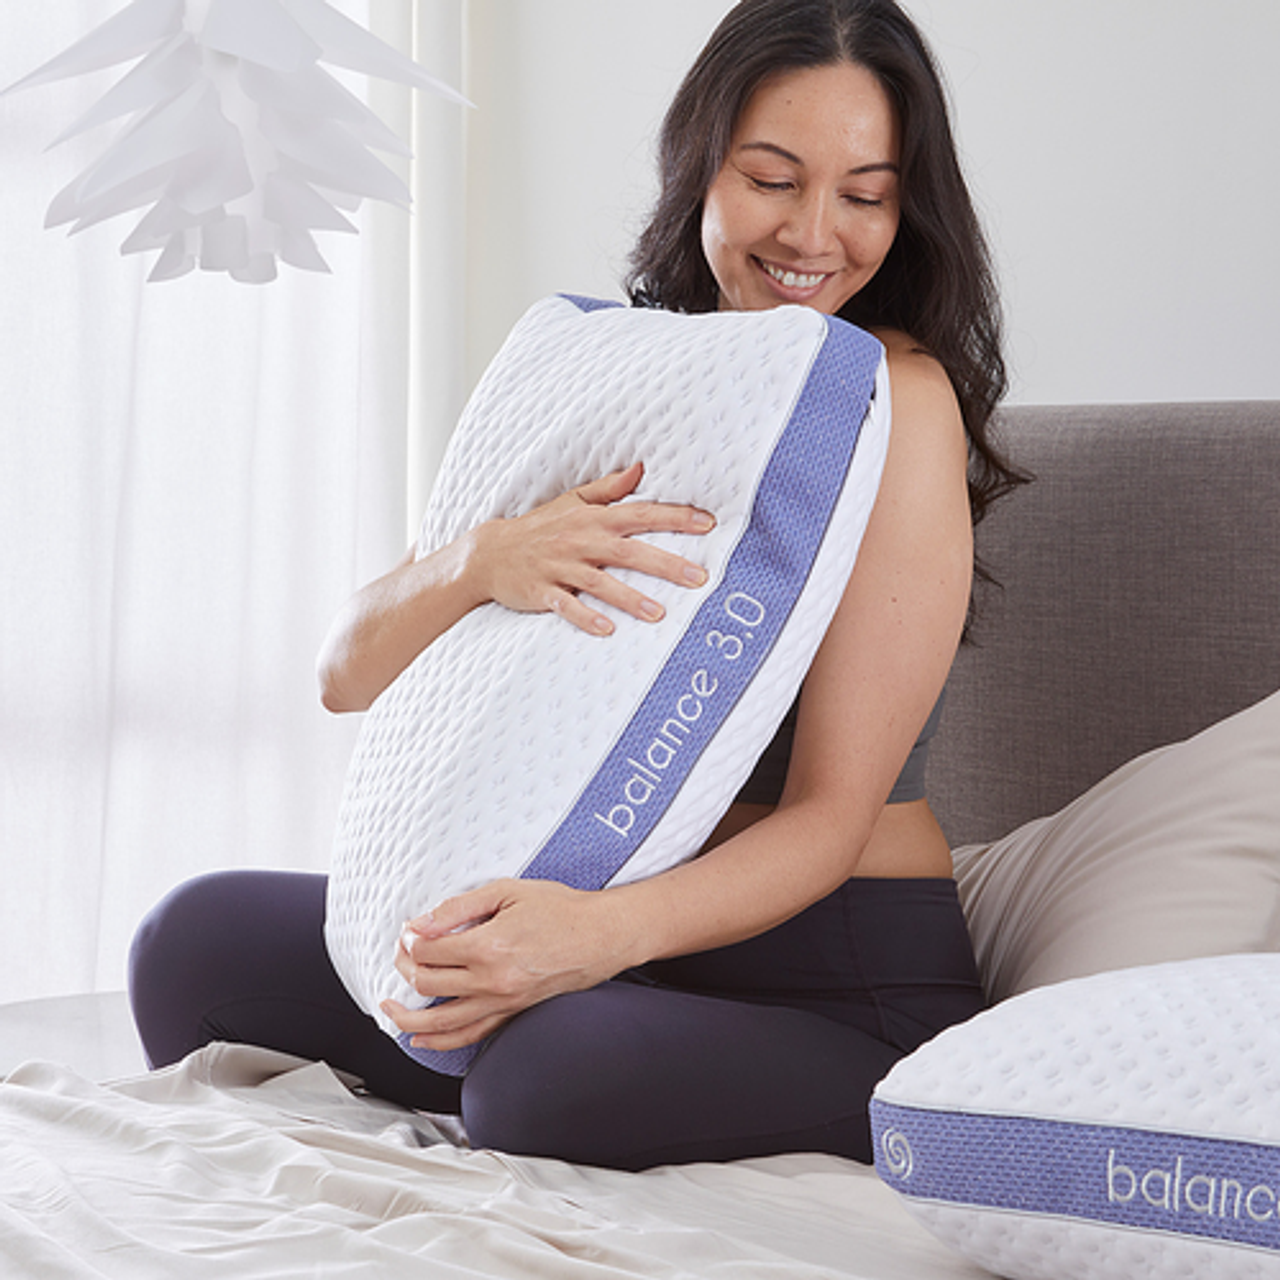 Bedgear - Balance Performance Pillow 3.0 - White